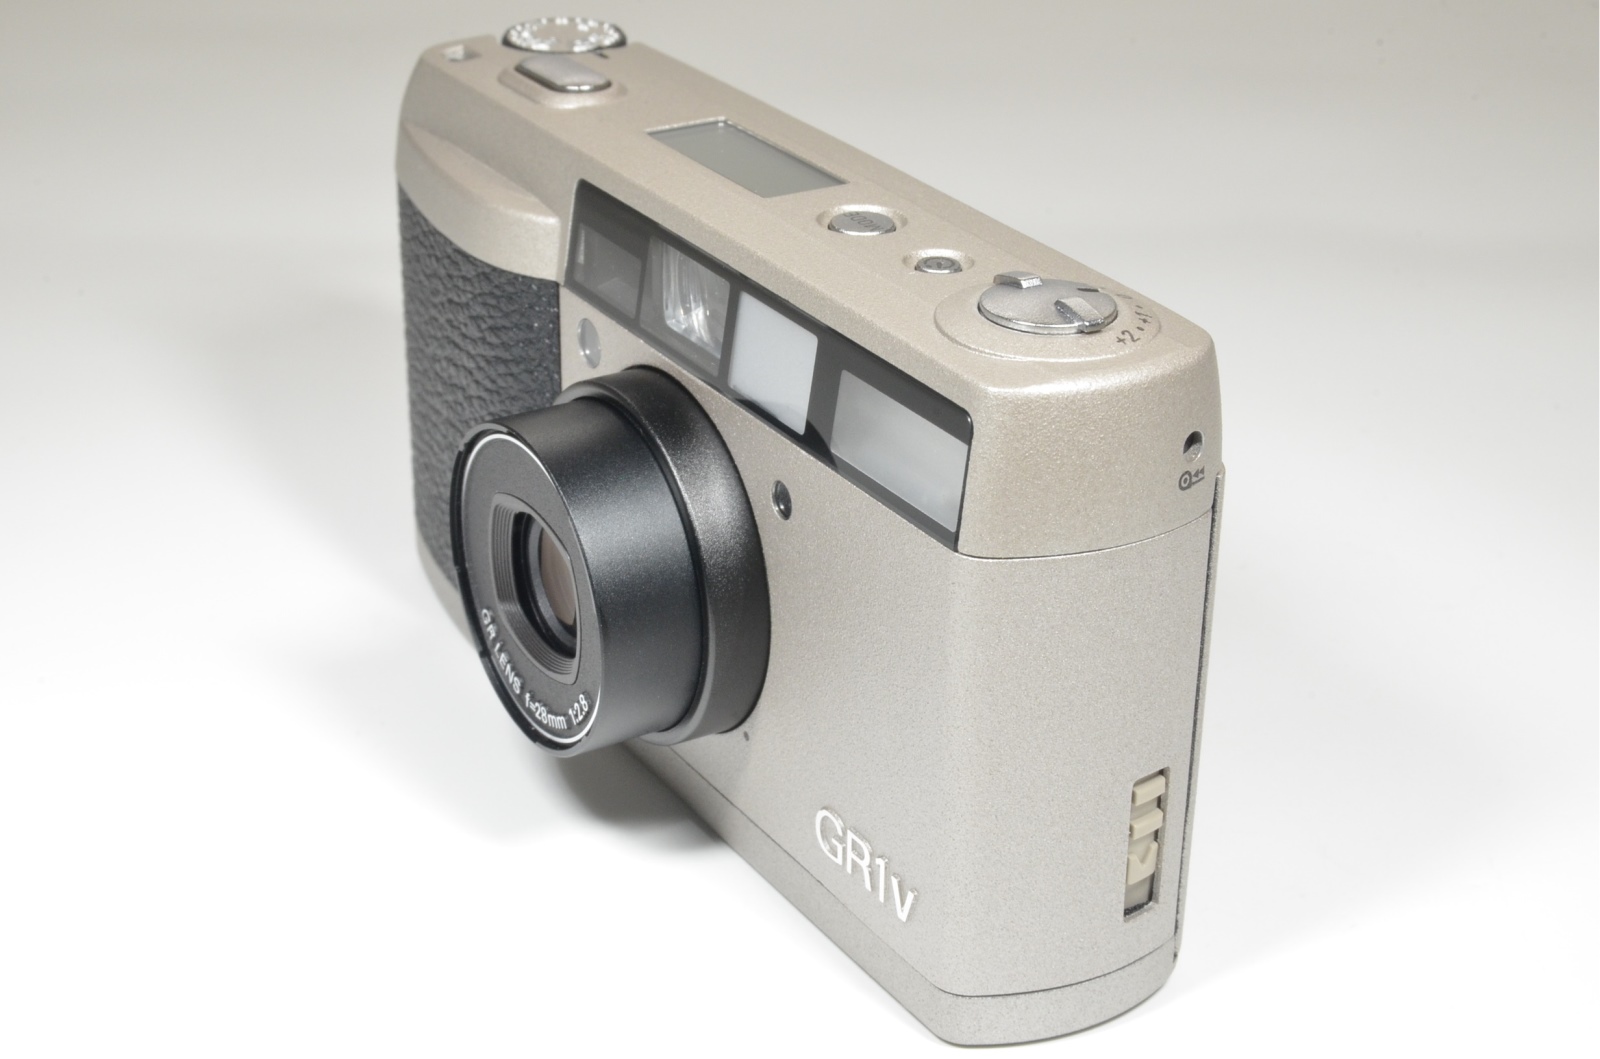 RICOH GR1v Date Silver 28mm f2.8 Point & Shoot 35mm Film Camera 